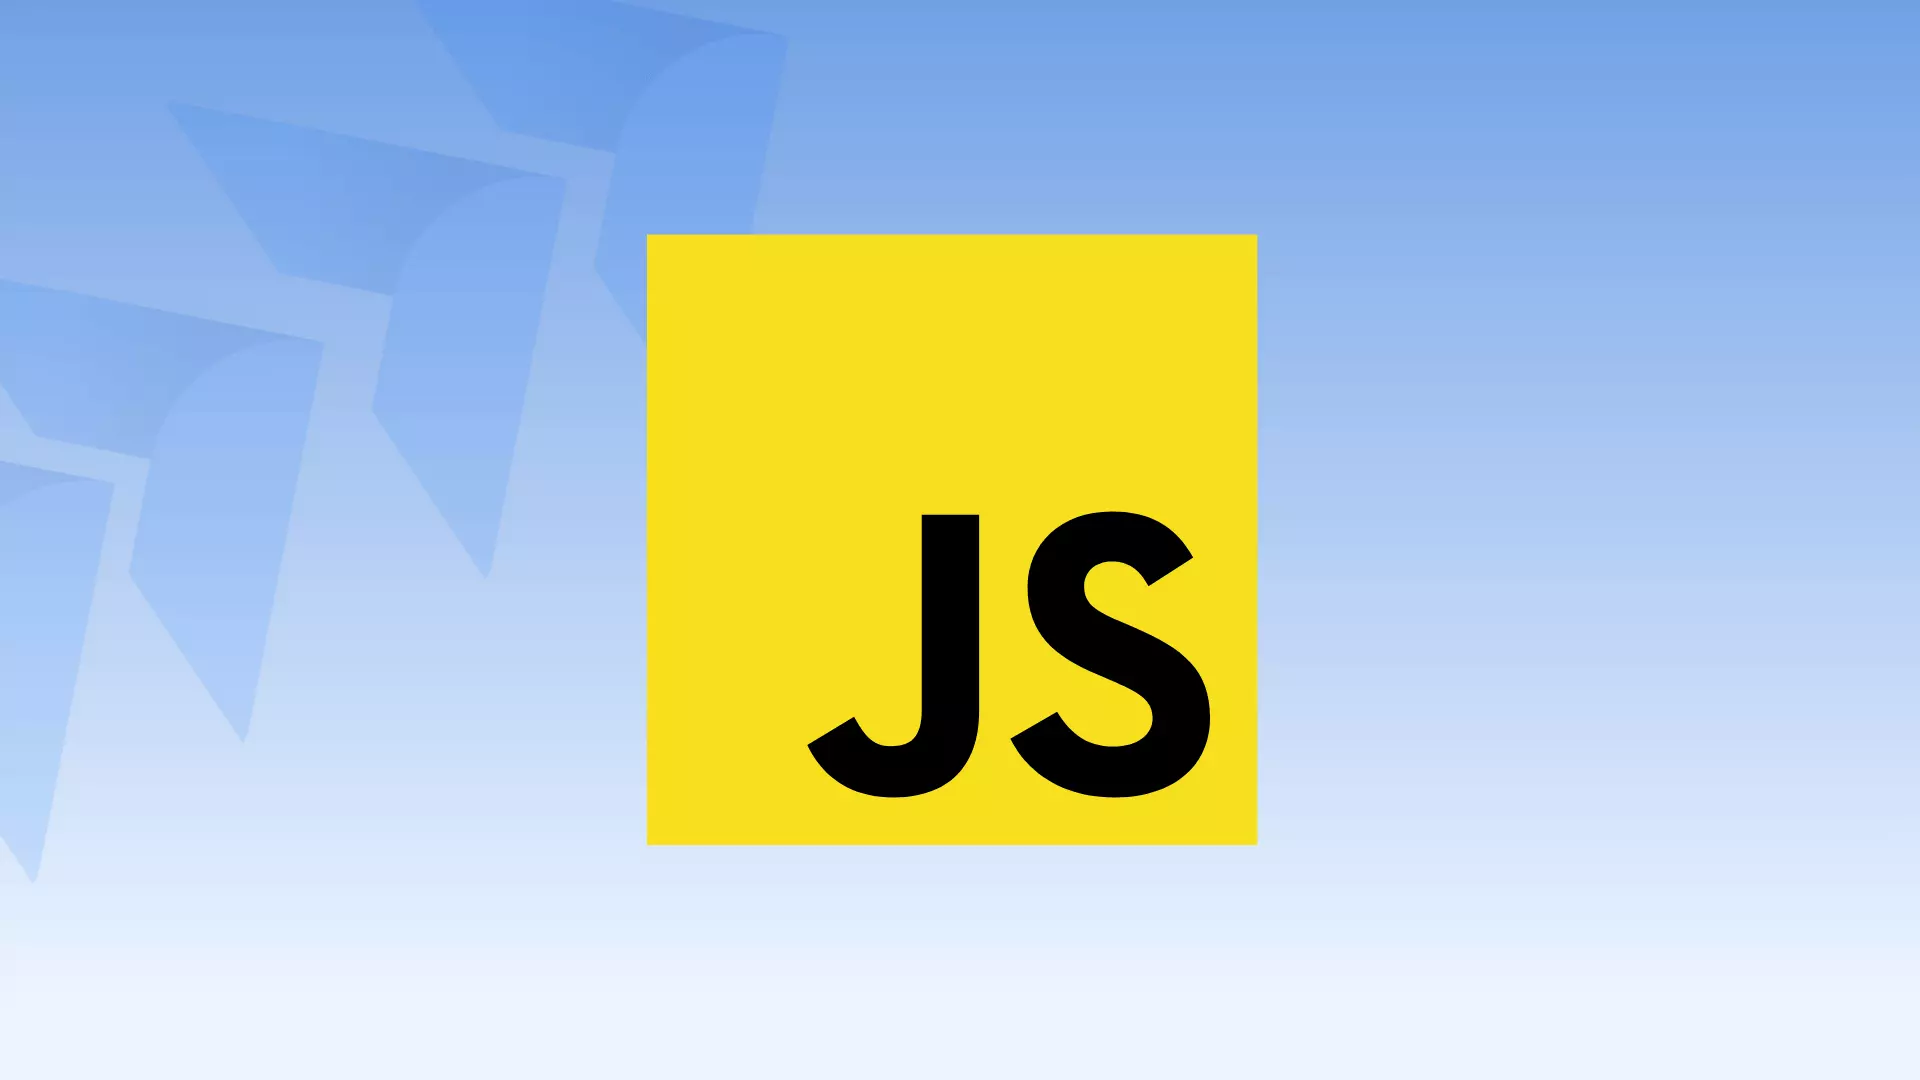 javascript frameworks